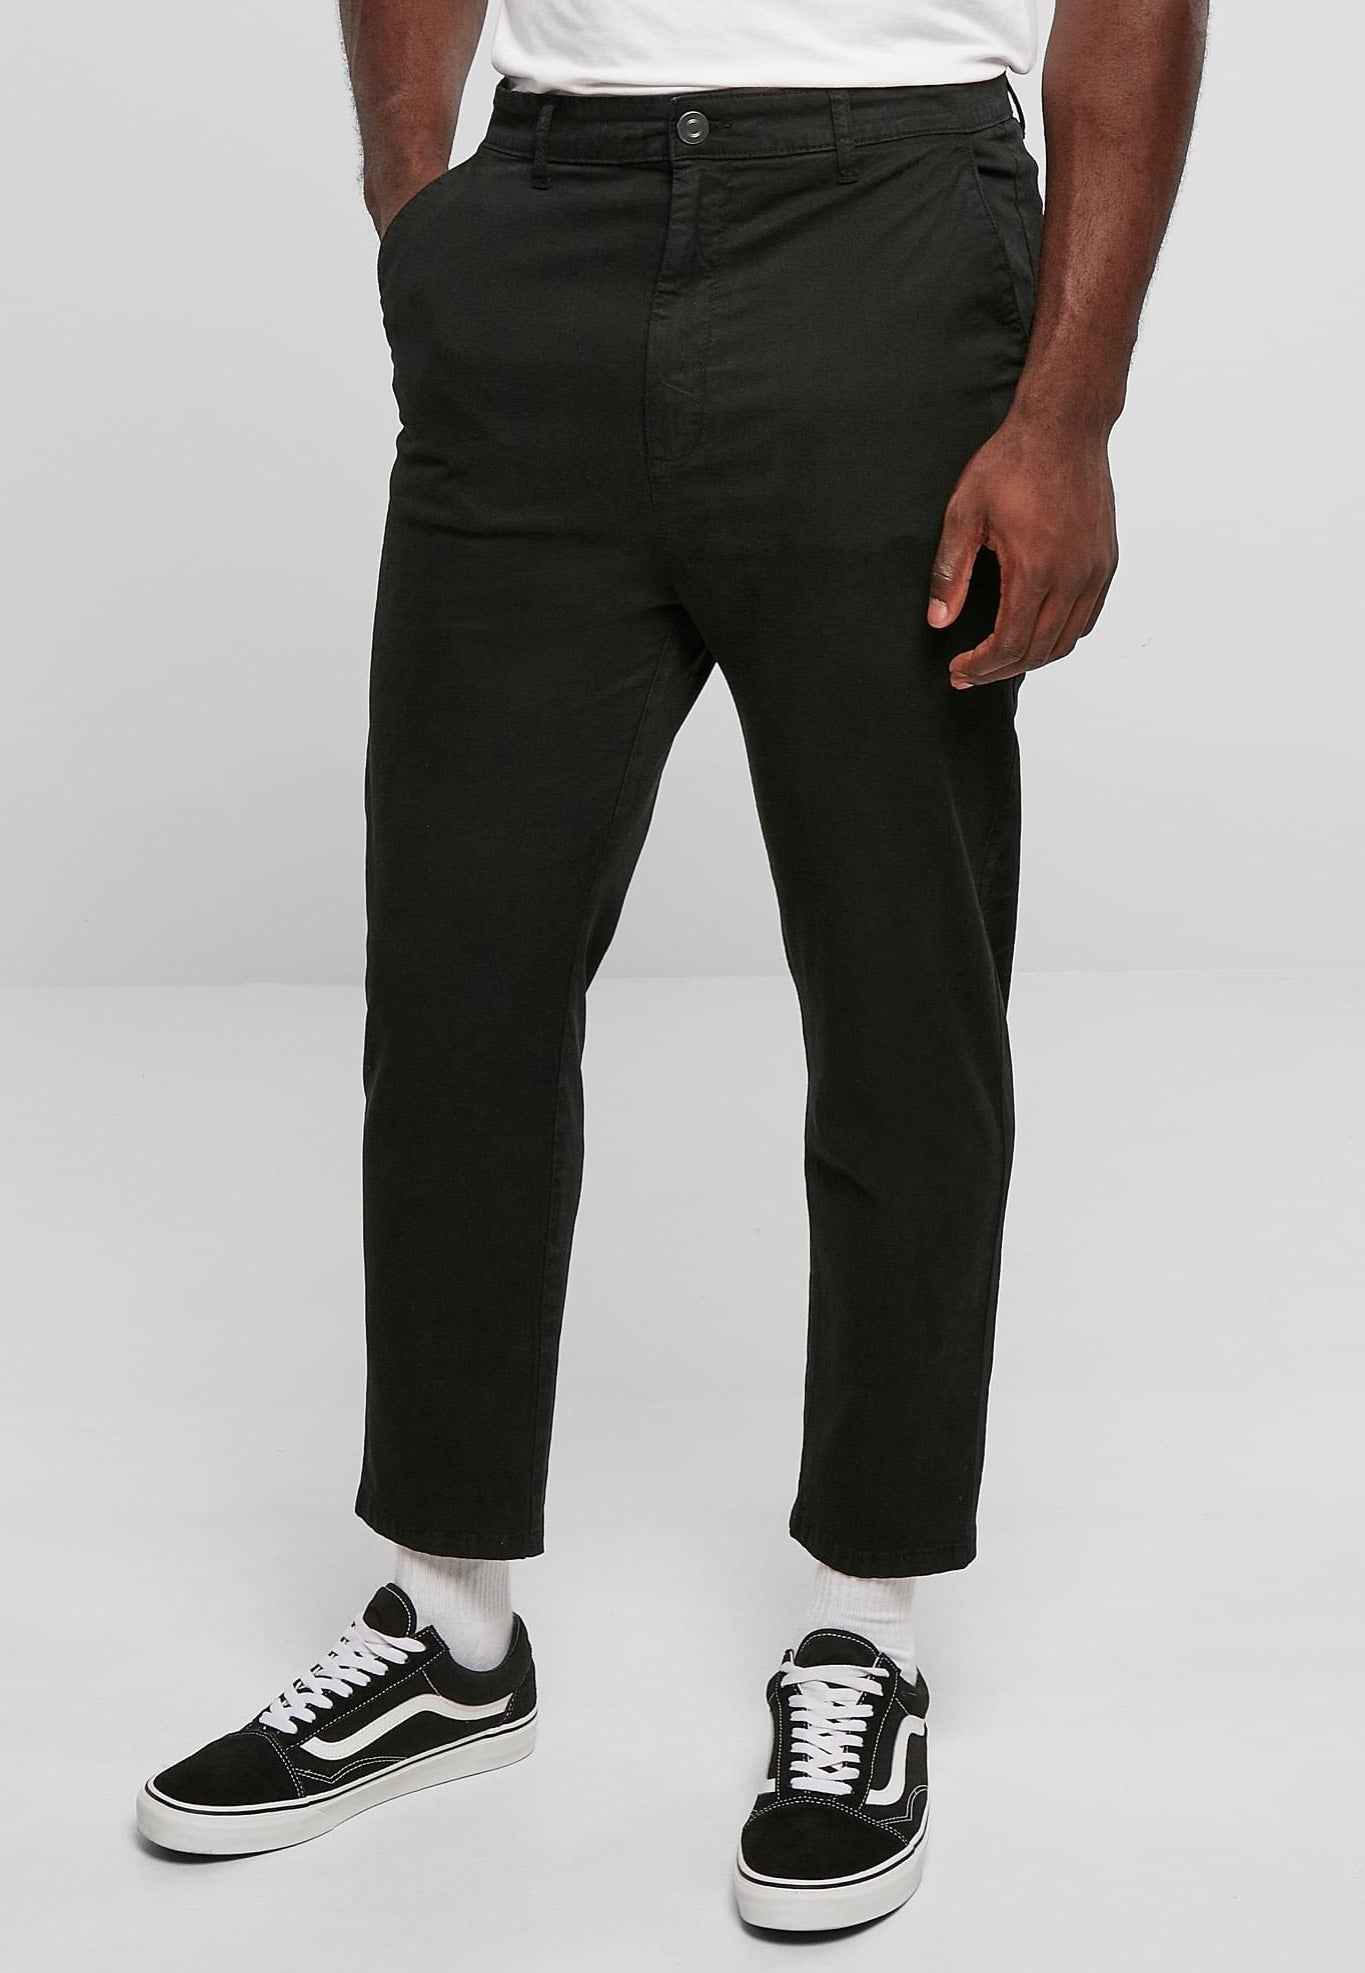 Urban Classics - Cropped Chino Black - Pants